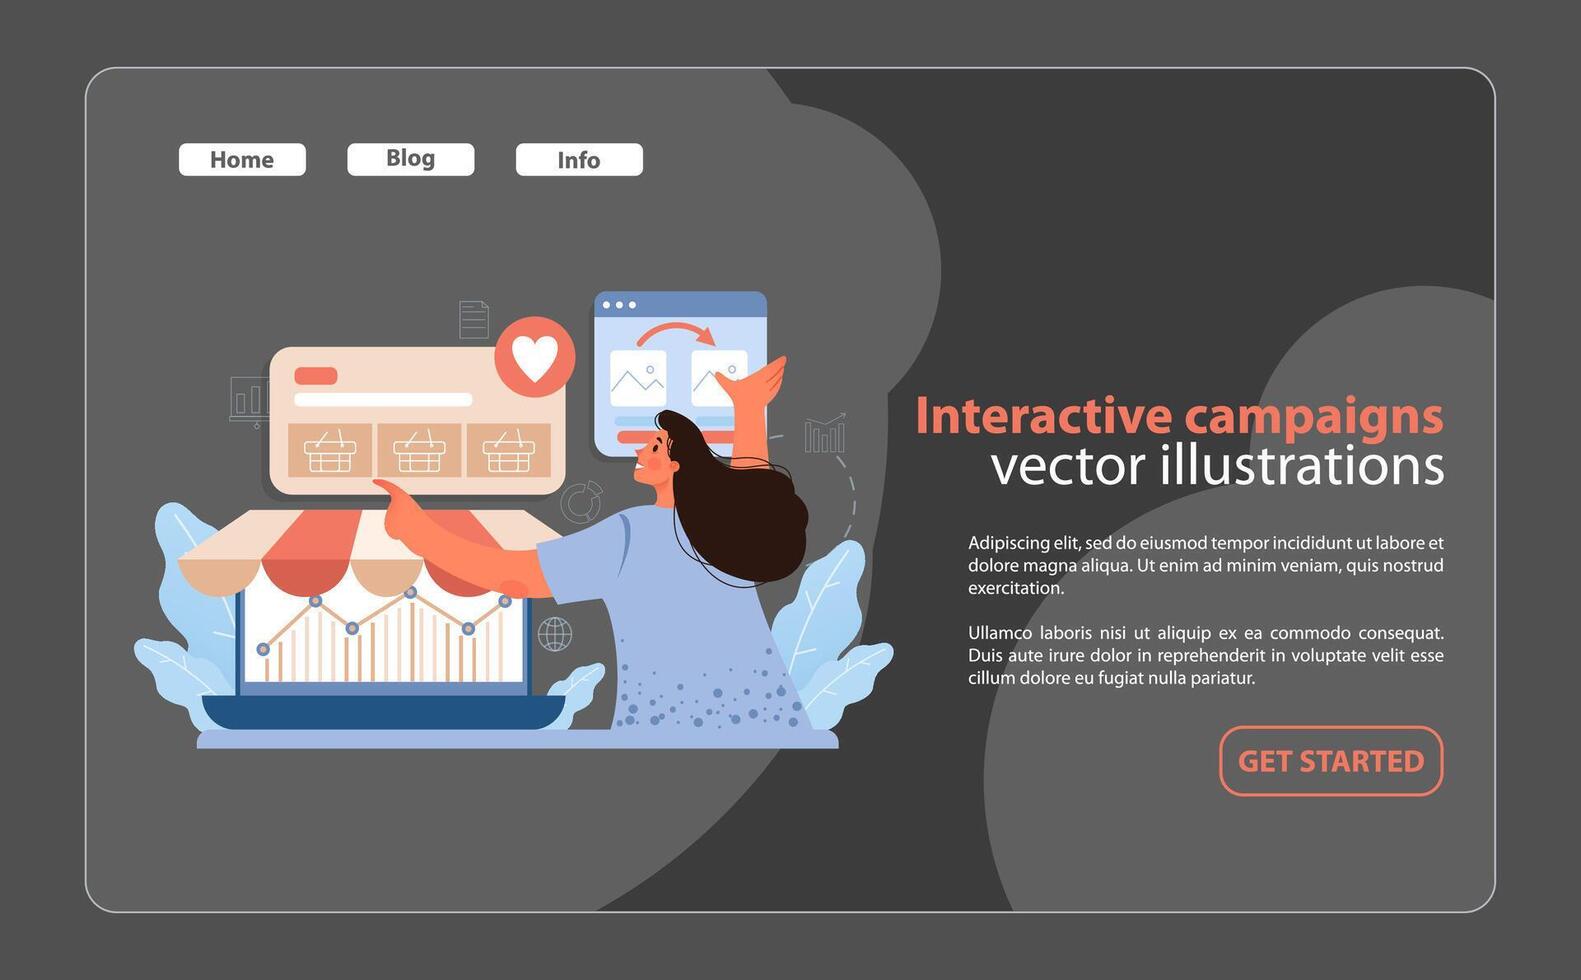 interactivo campañas para consumidor compromiso. atractivo visual de un comercializador vector